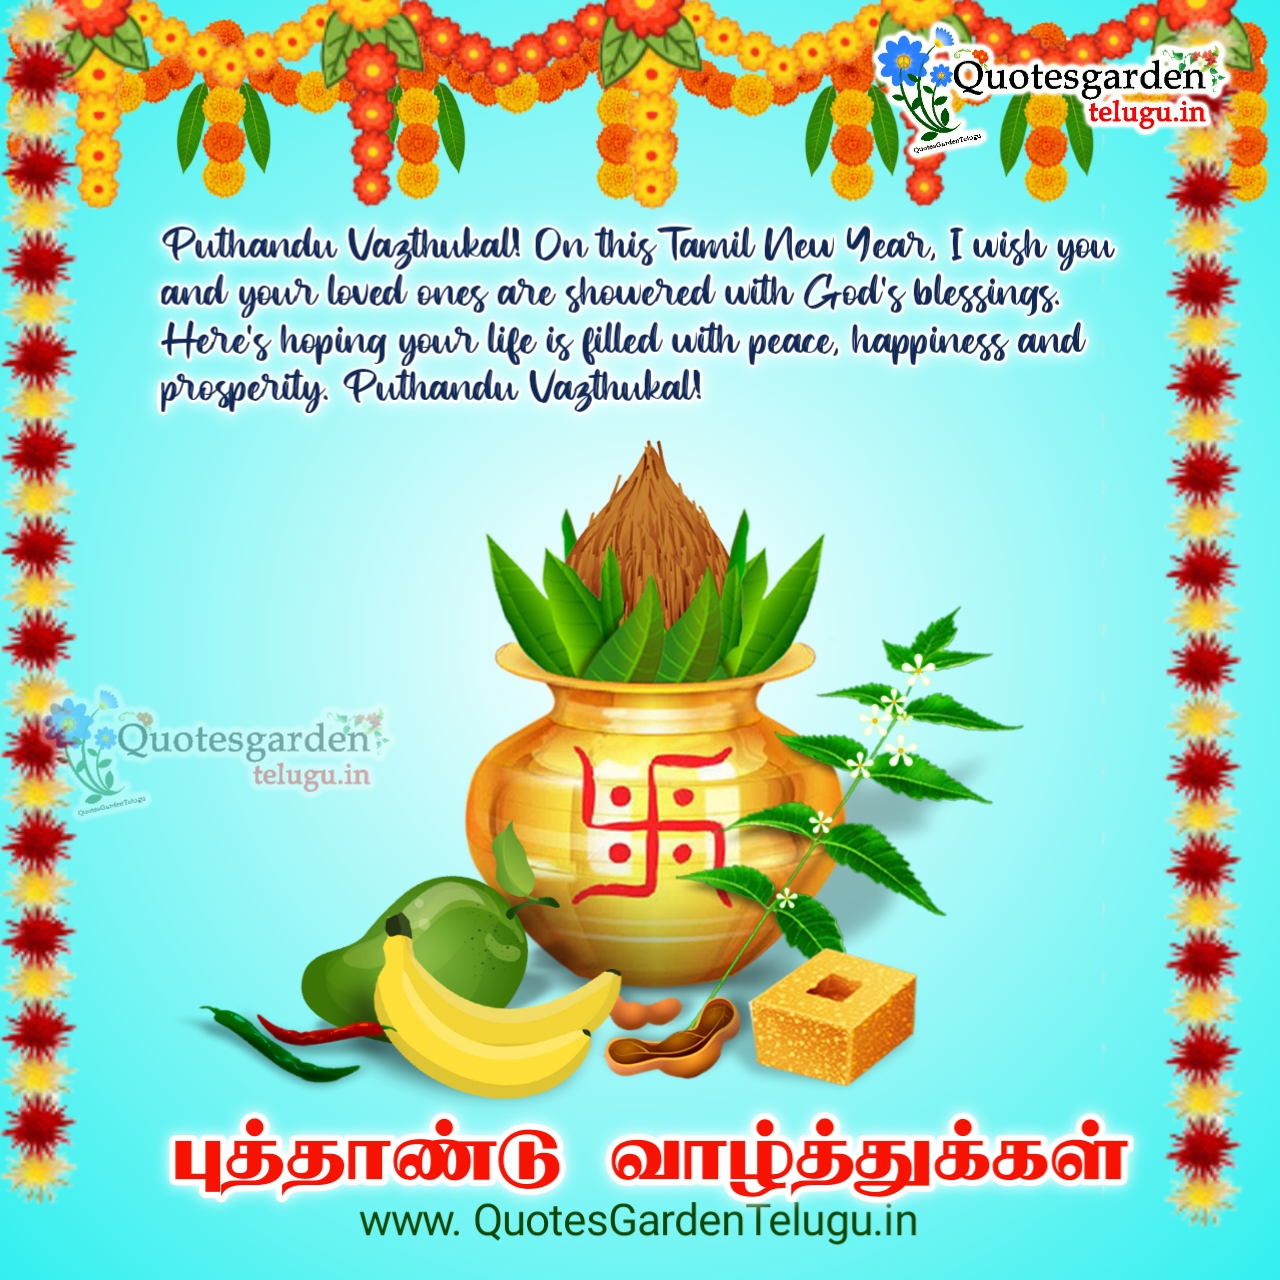 Tamil Puthandu Nalvazthukal In Tamil Quotes Garden Telugu Telugu